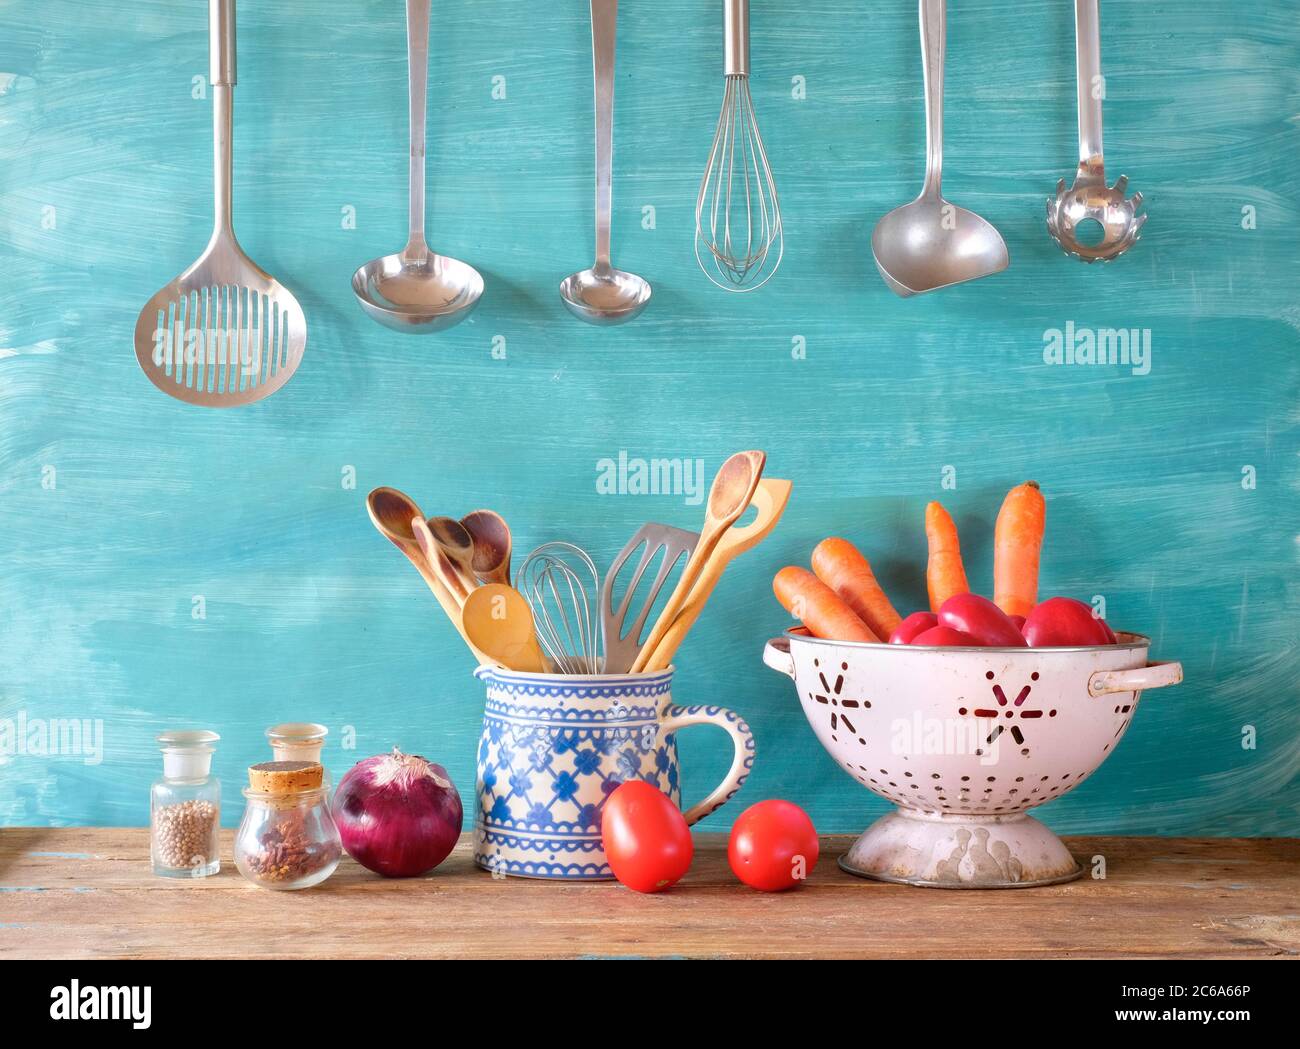 verdure e utensili da cucina per cucina commerciale, cibo, cucina, cucina. Foto Stock